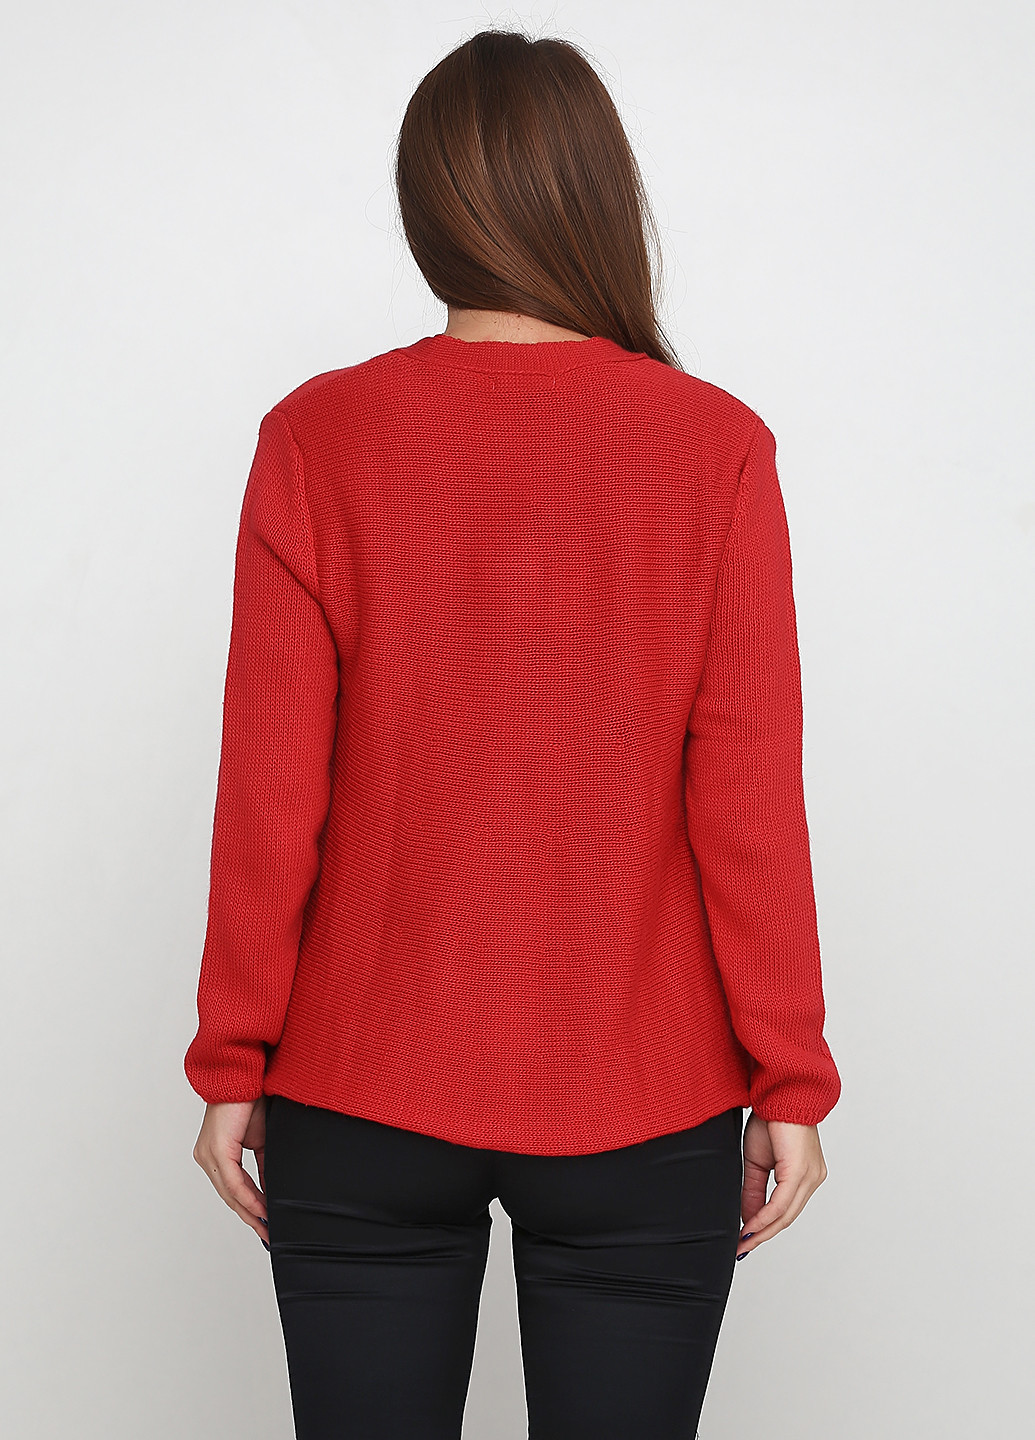 Красный демисезонный пуловер пуловер SIR RAYMOND TAILOR